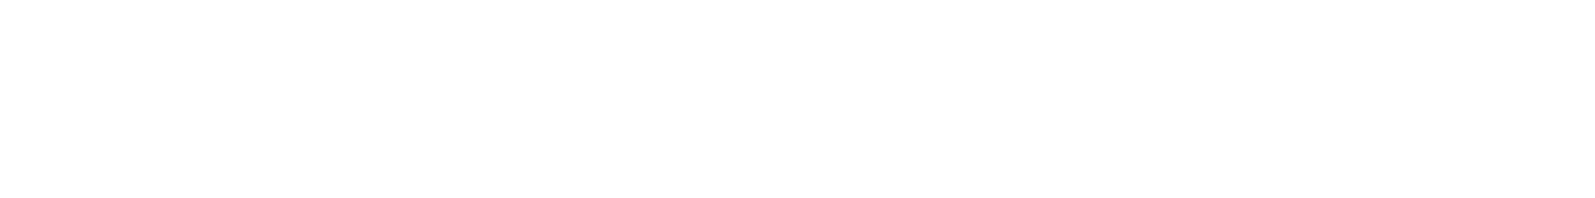 C&D International Investment Group logo large for dark backgrounds (transparent PNG)